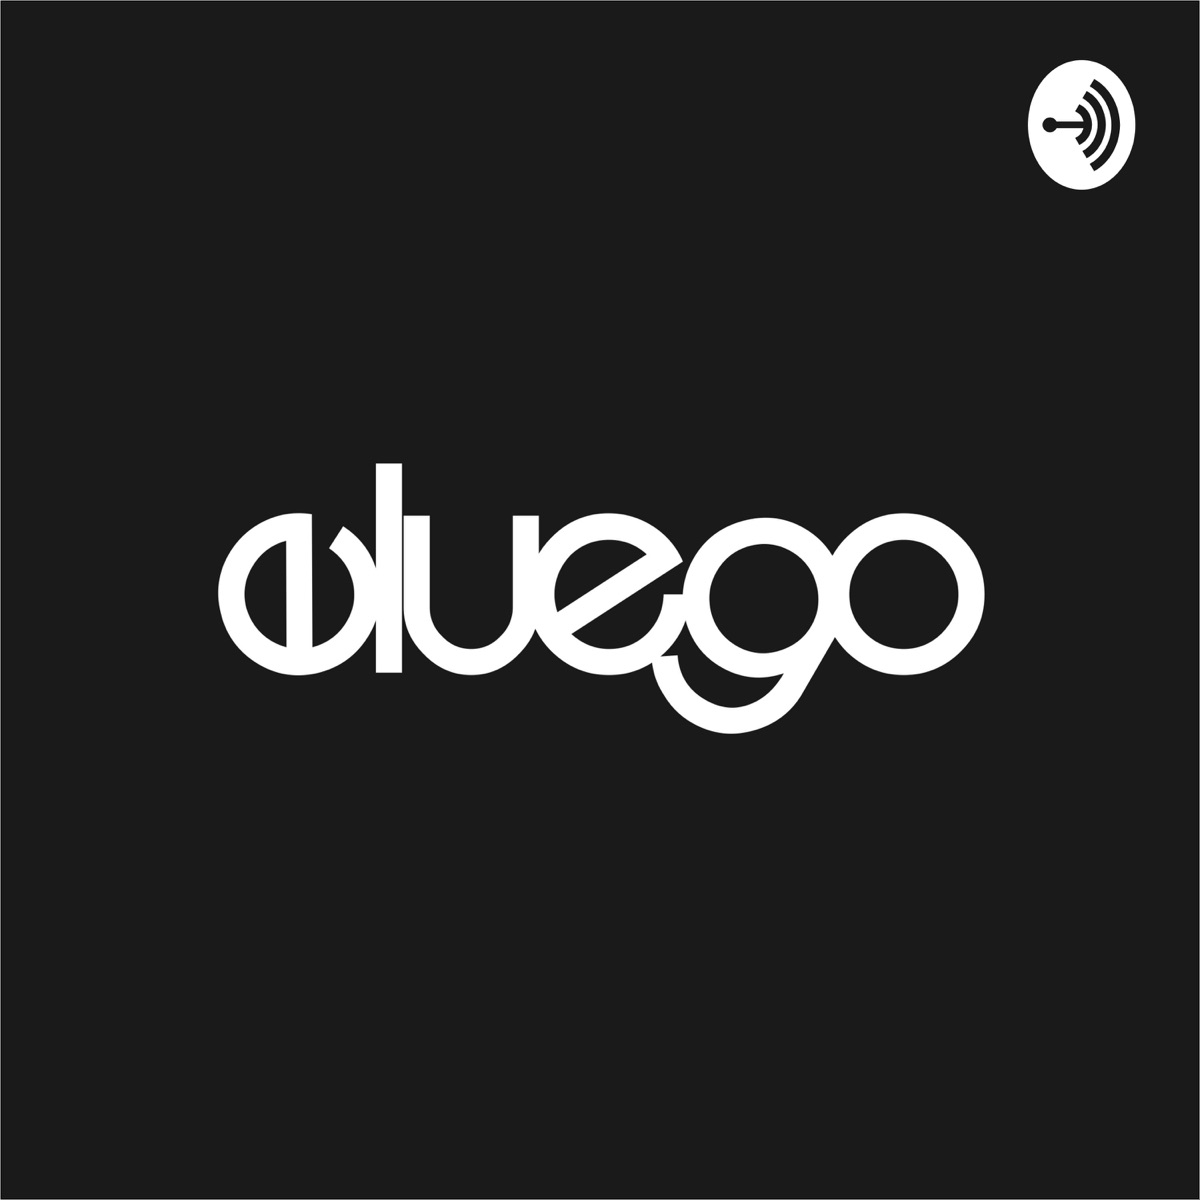 Eluego Podcast Podtail